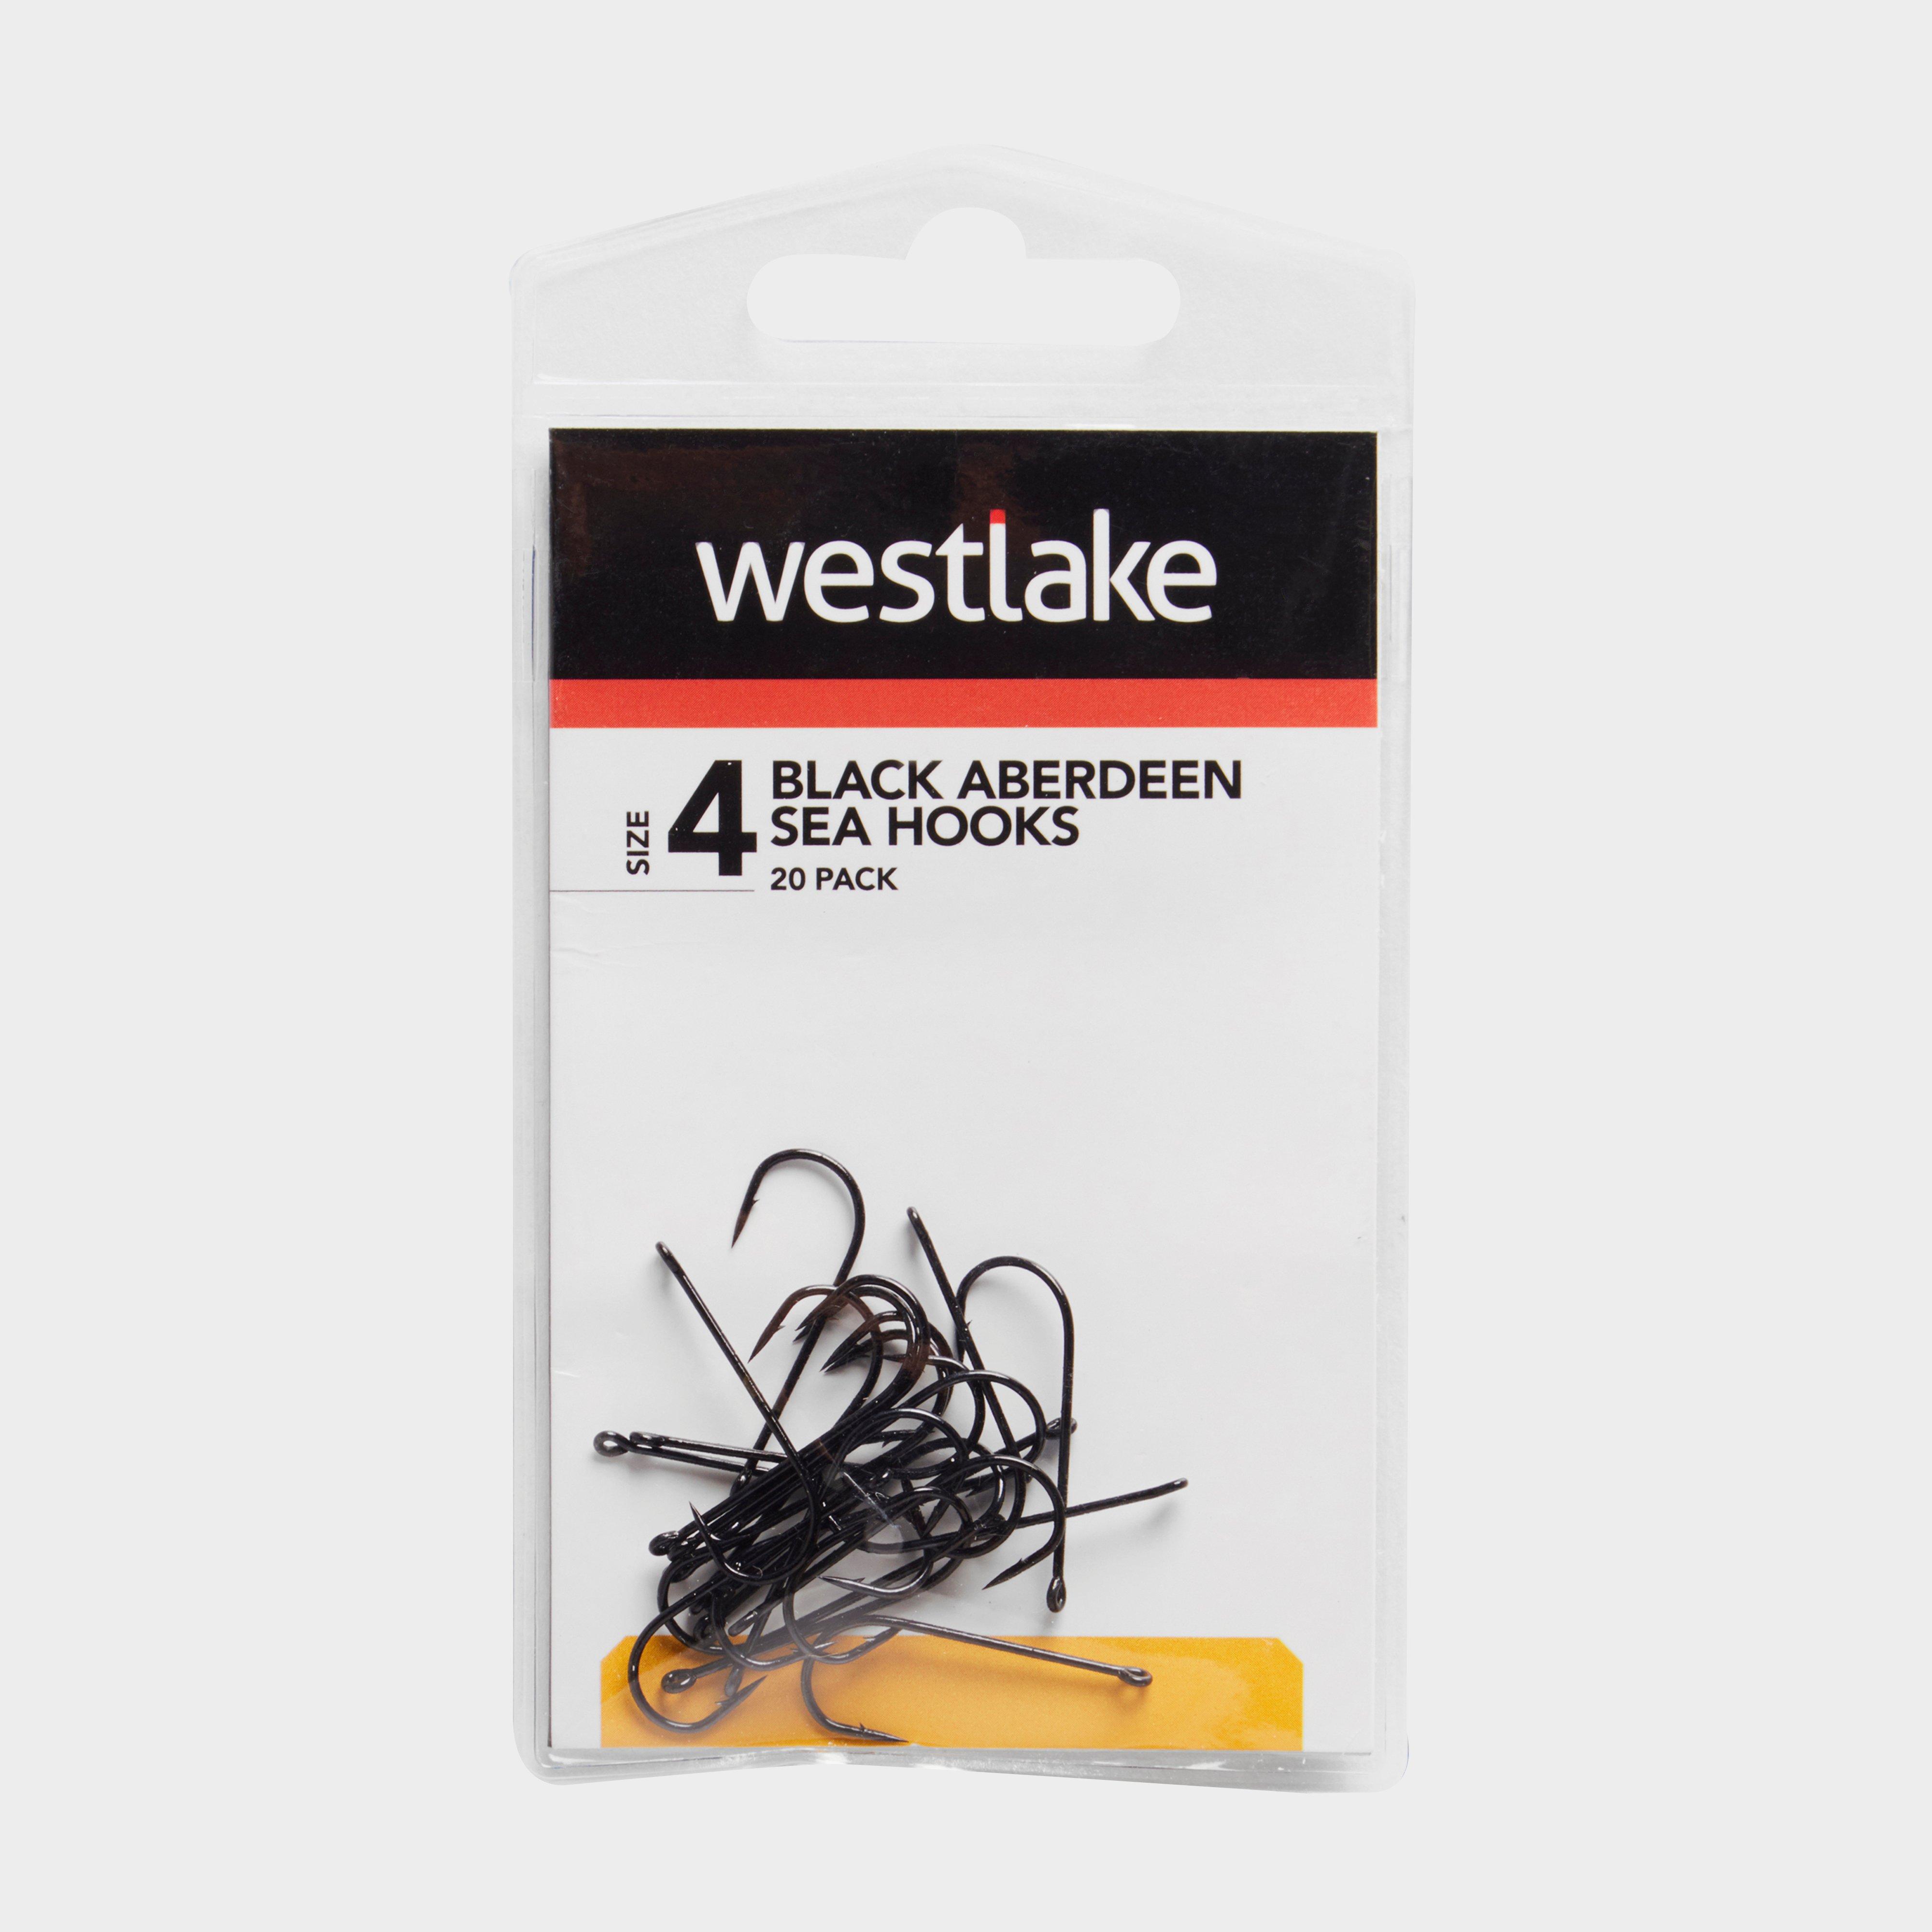 Westlake Black Aberdeen 20 Pack Size 4